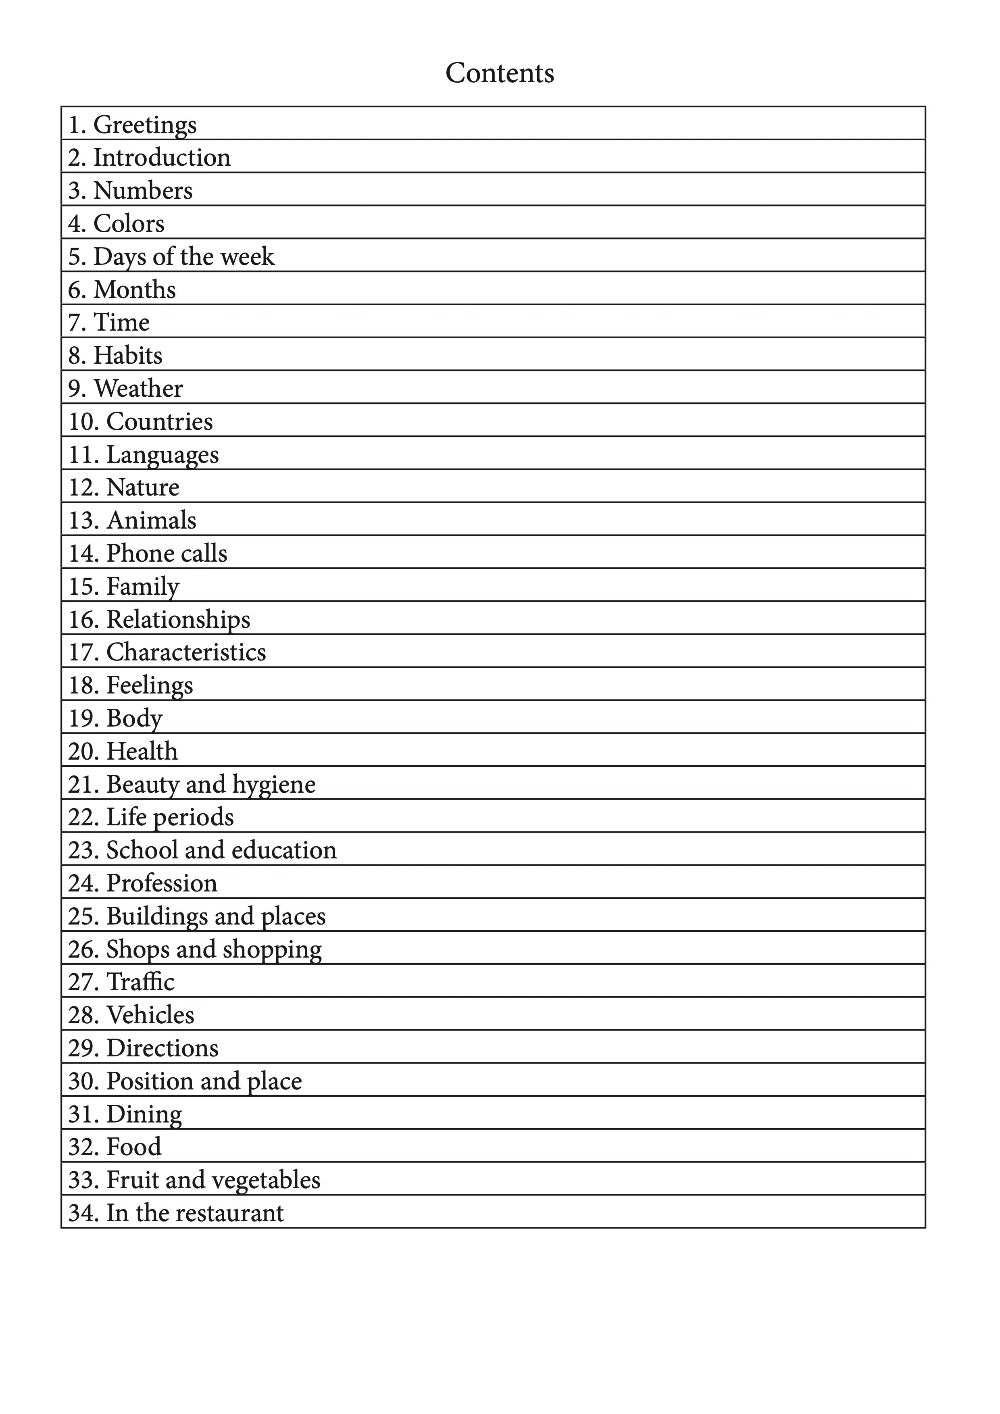 Kokborok language learning notebook contents page 1